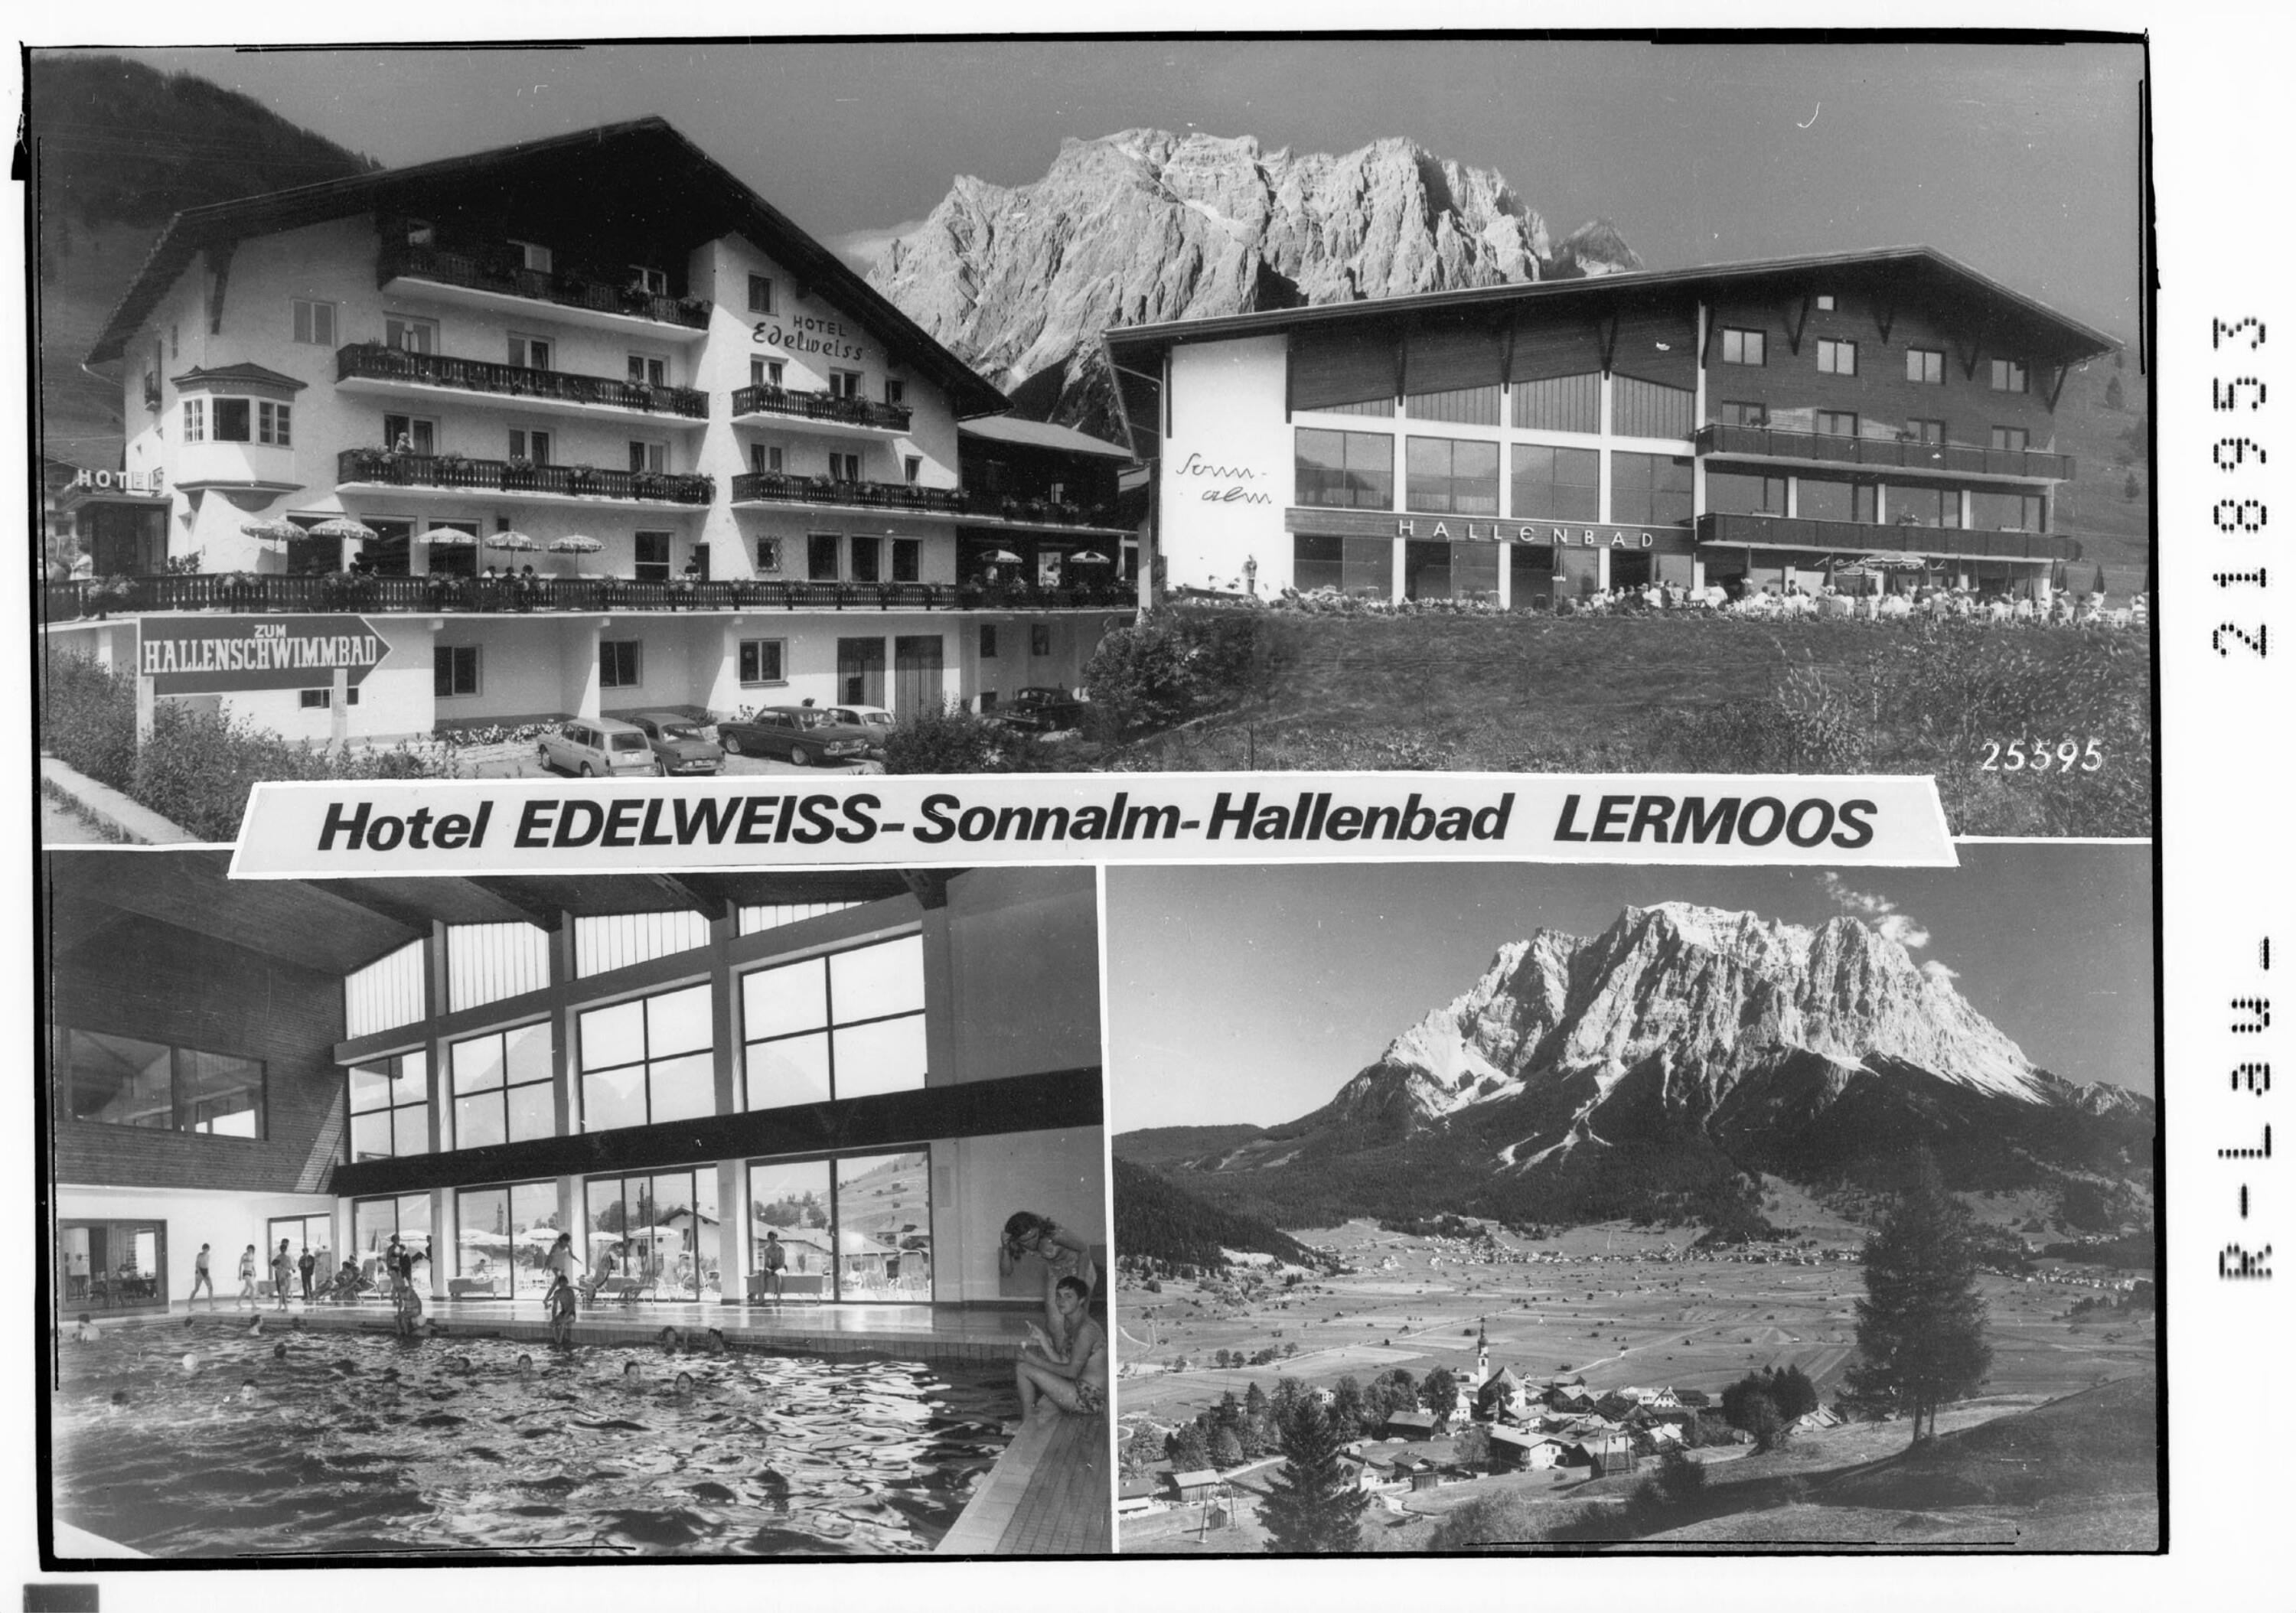 Hotel Edelweiss - Sonnalm - Hallenbad Lermoos></div>


    <hr>
    <div class=